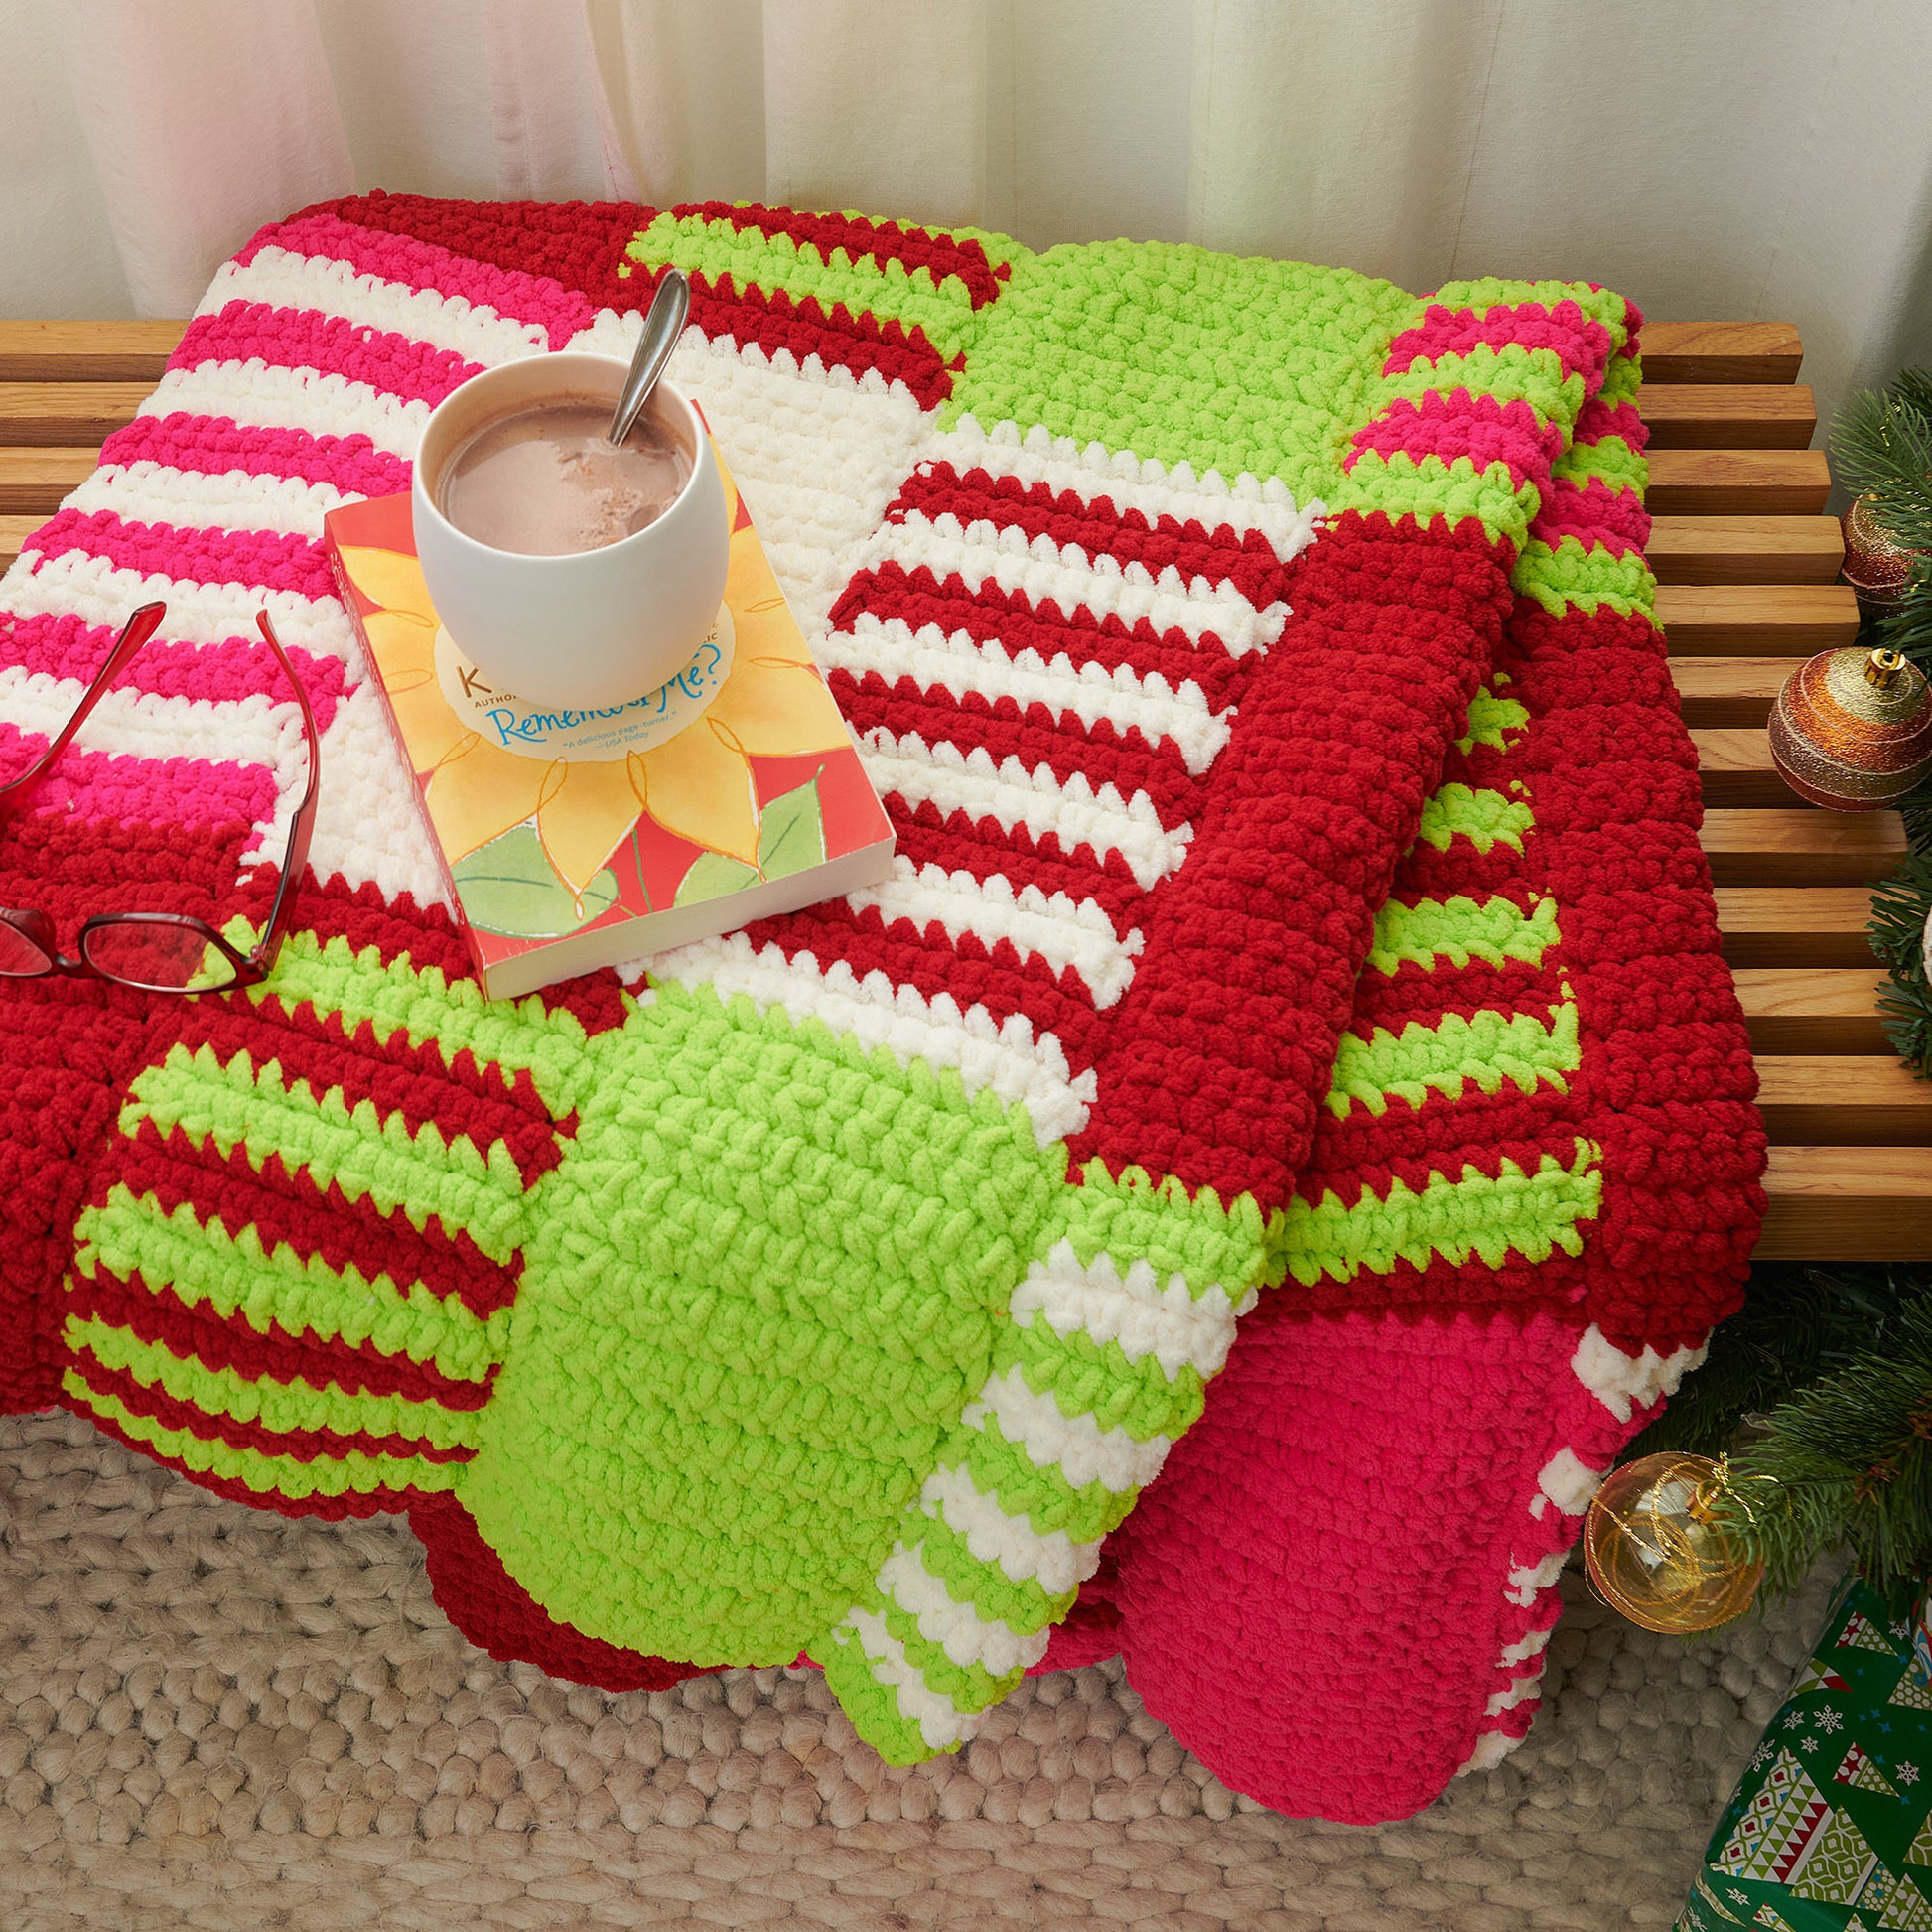 Free Bernat Interwoven Colorful Crochet Stripes Blanket Pattern